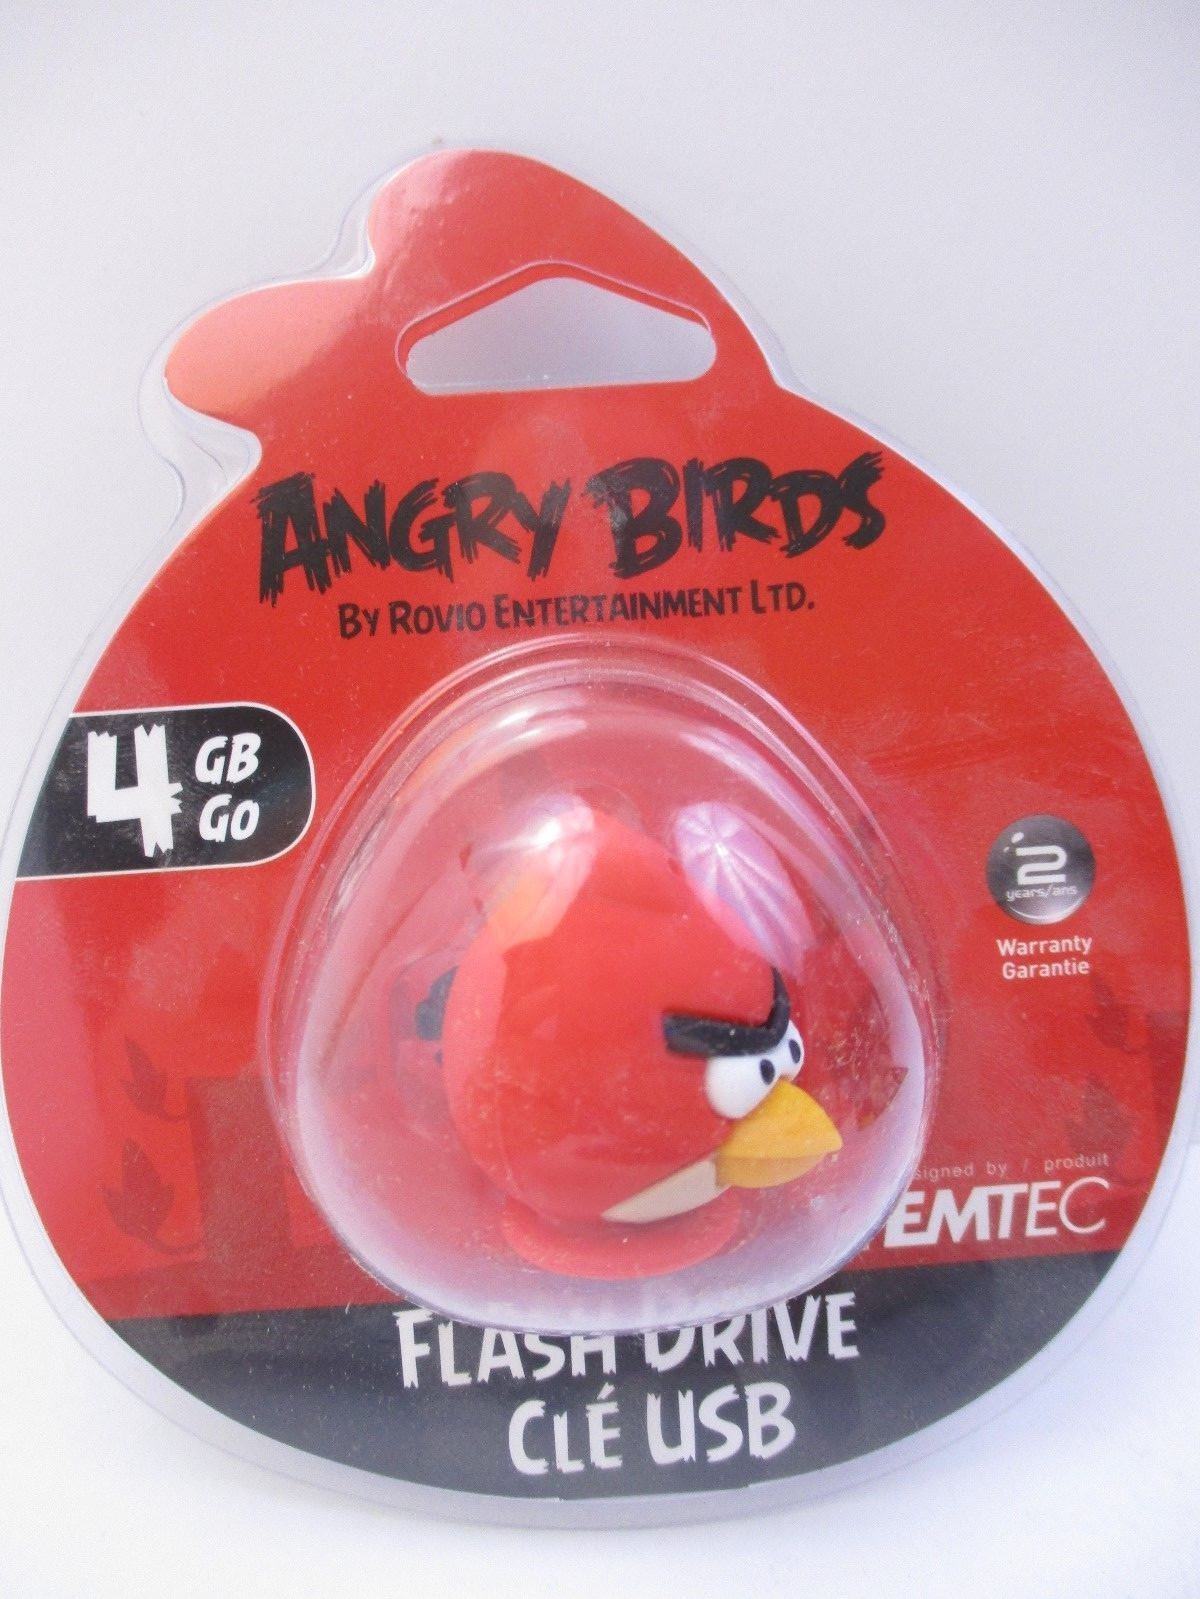 EMTEC - 4 GB USB 2.0 FLASH DRIVE - ANGRY BIRDS \